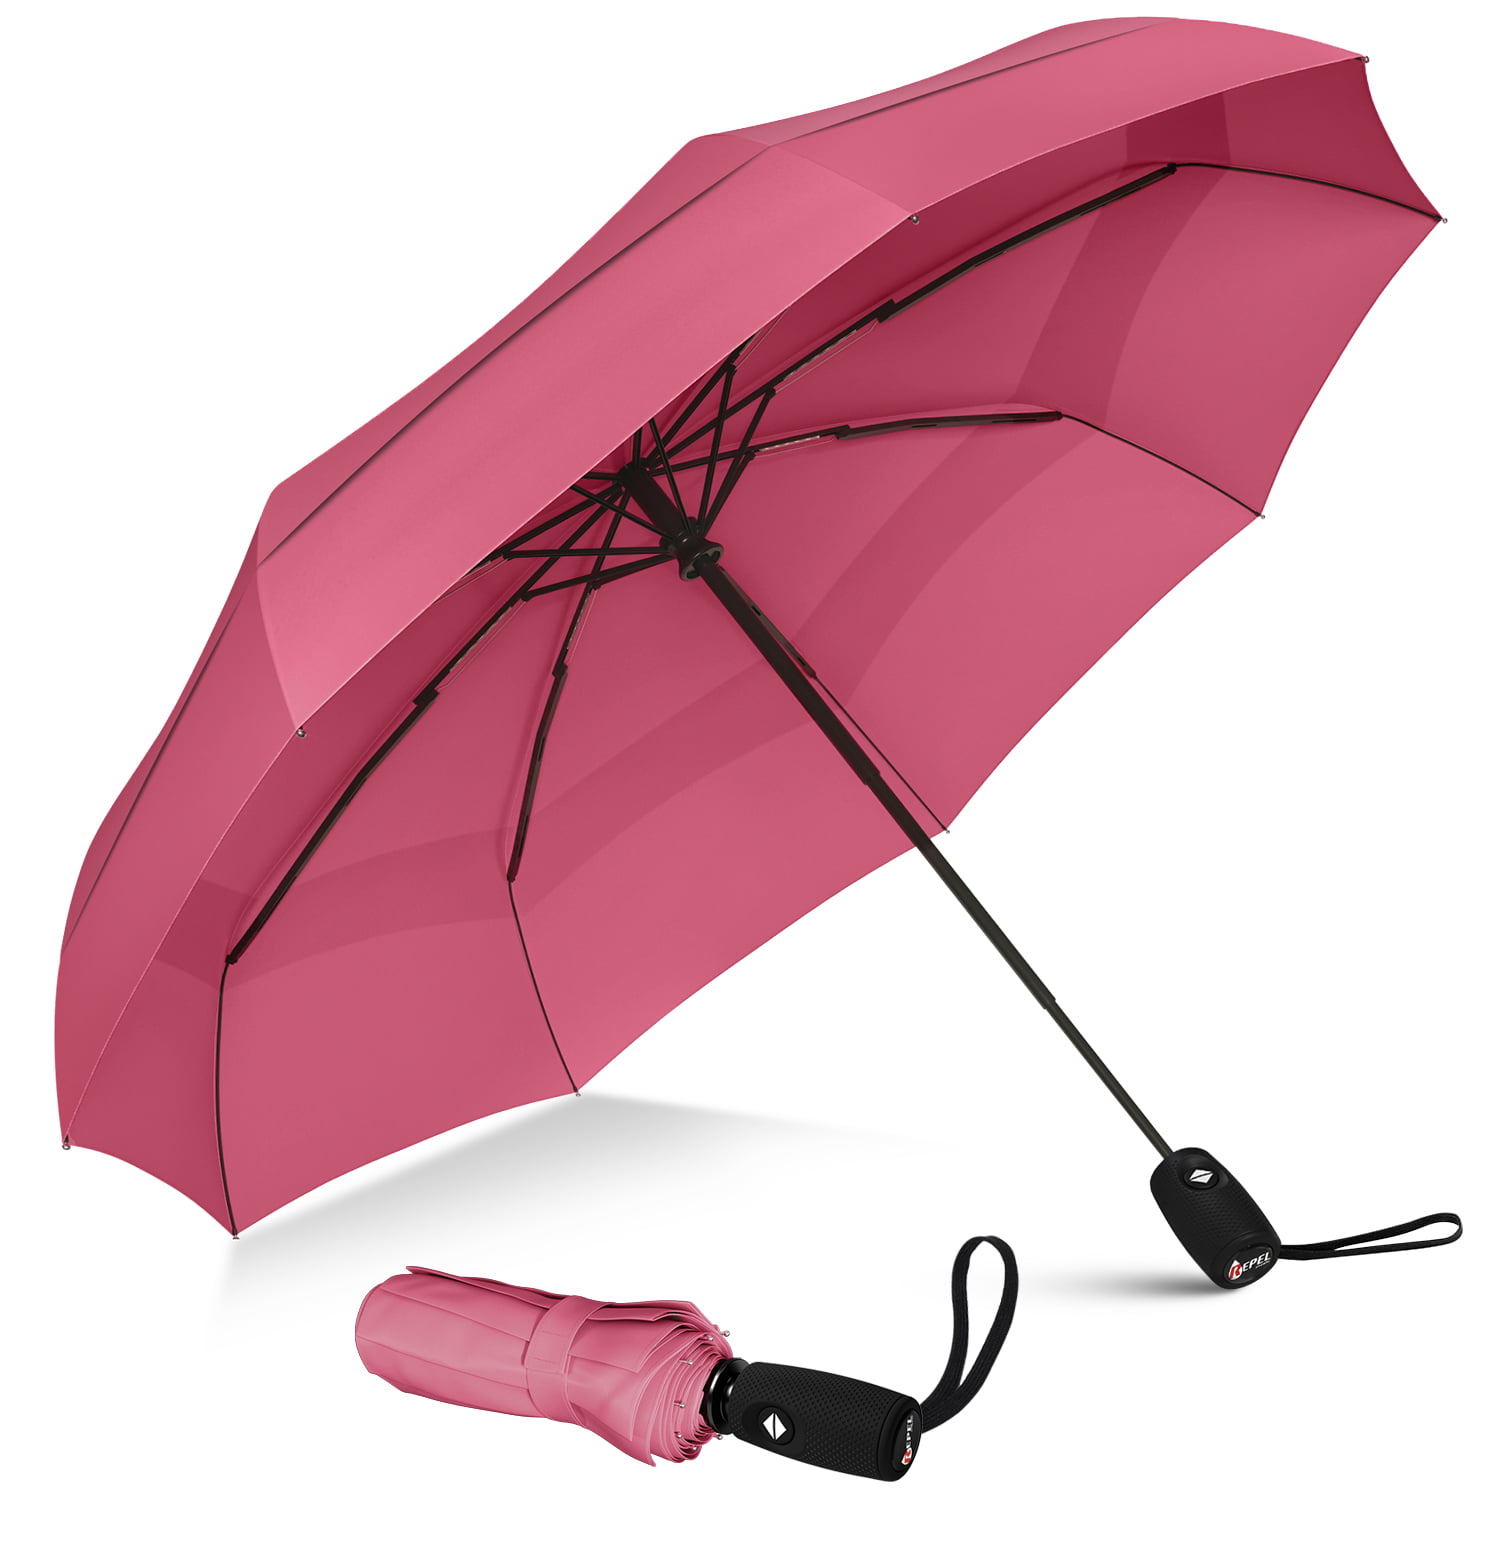 Rain And UV Seamless Pattern With Unicorns Unique Novel Auto Open Close Umbrella Compact Outdoor Travel Umbrella Resistant To Wind 